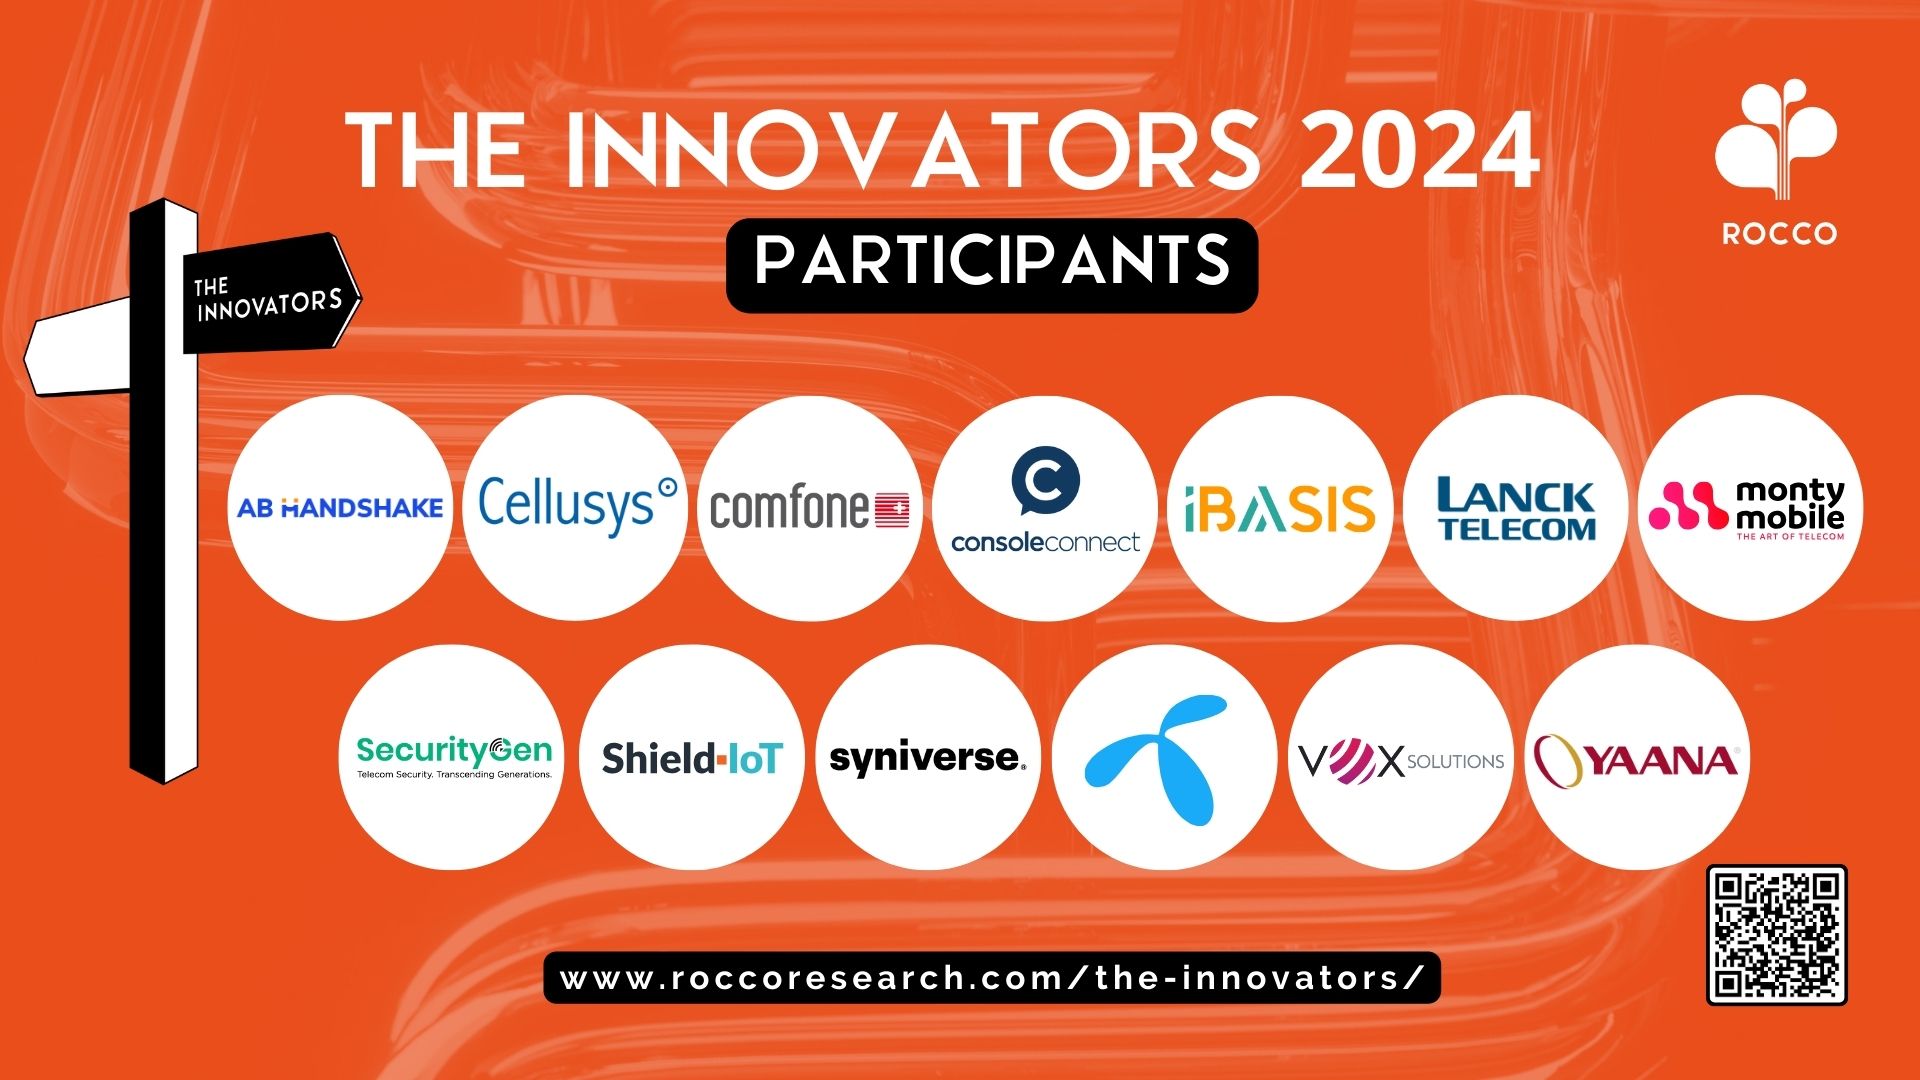 The Innovators 2024 participants